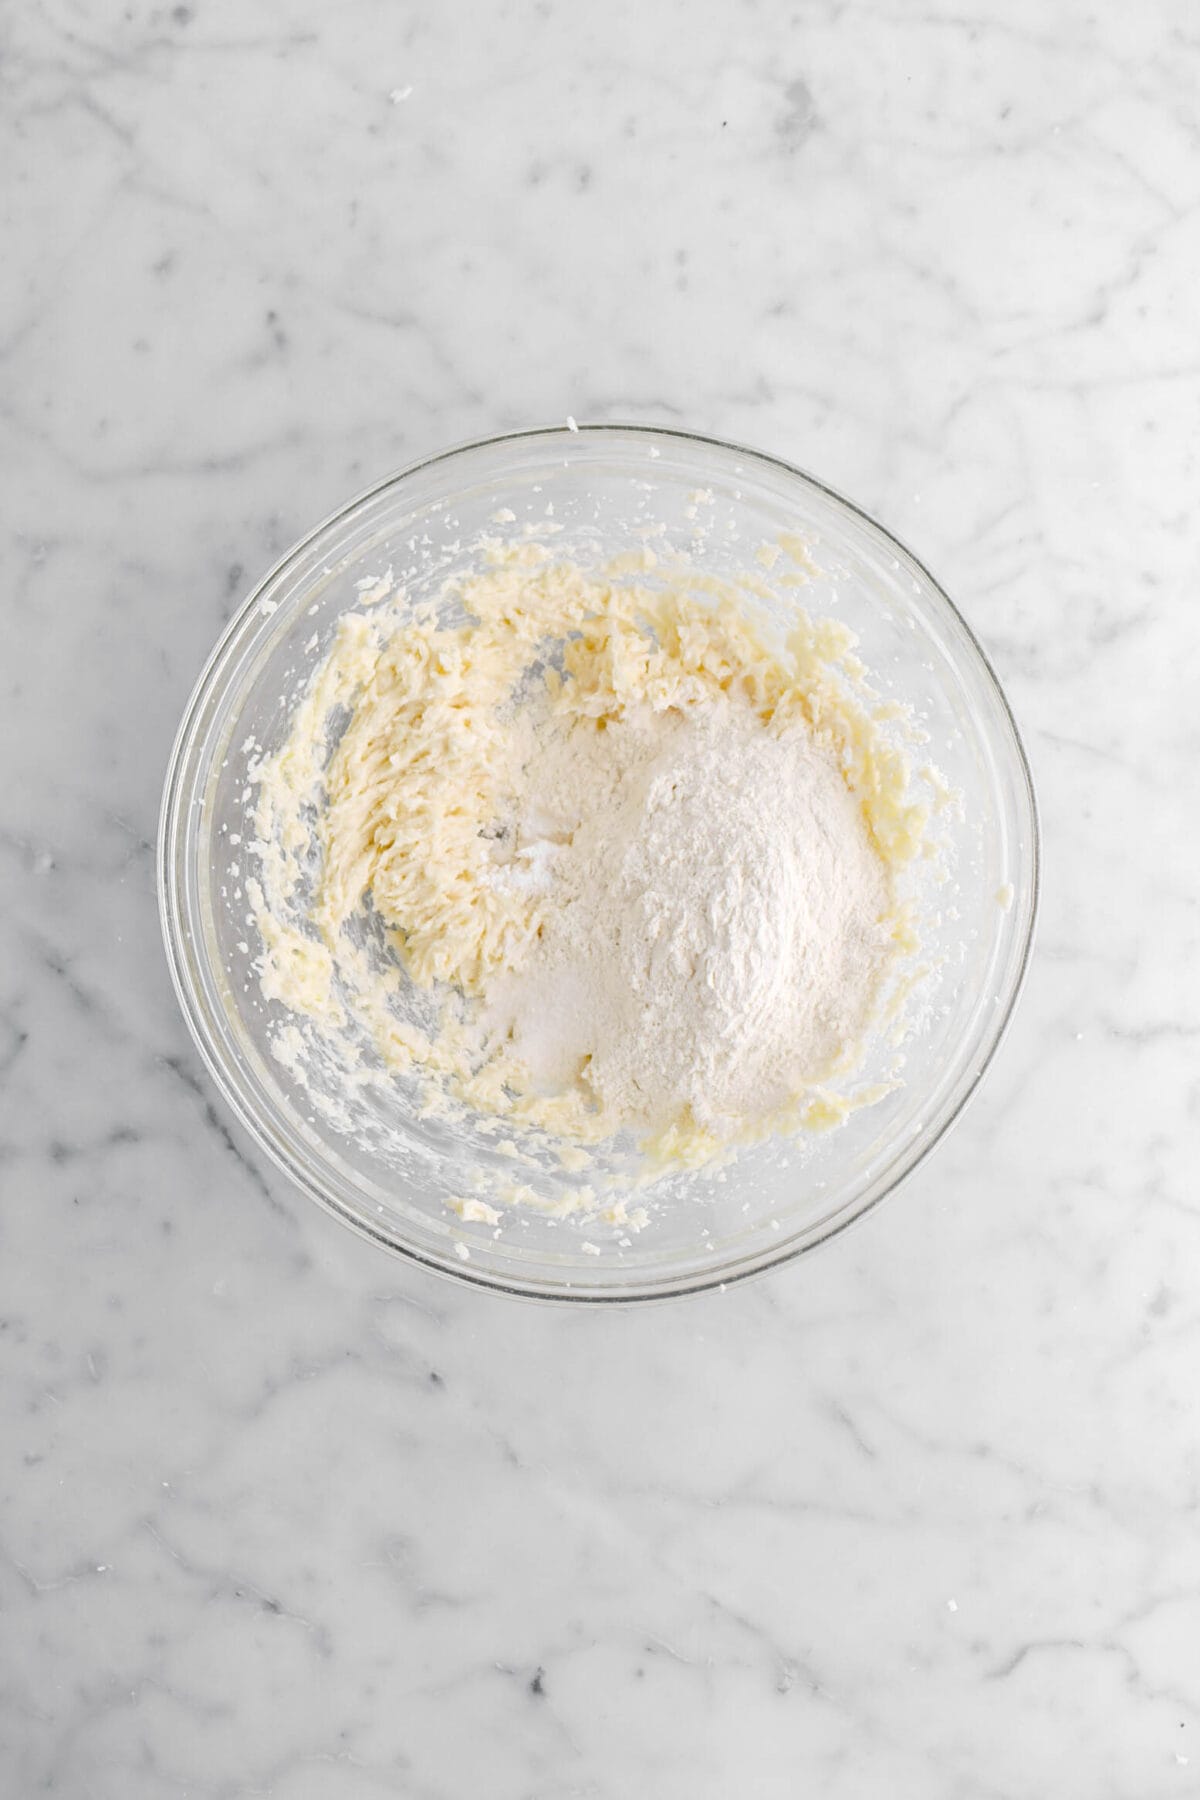 flour, baking powder, and salt added to butter mixture.